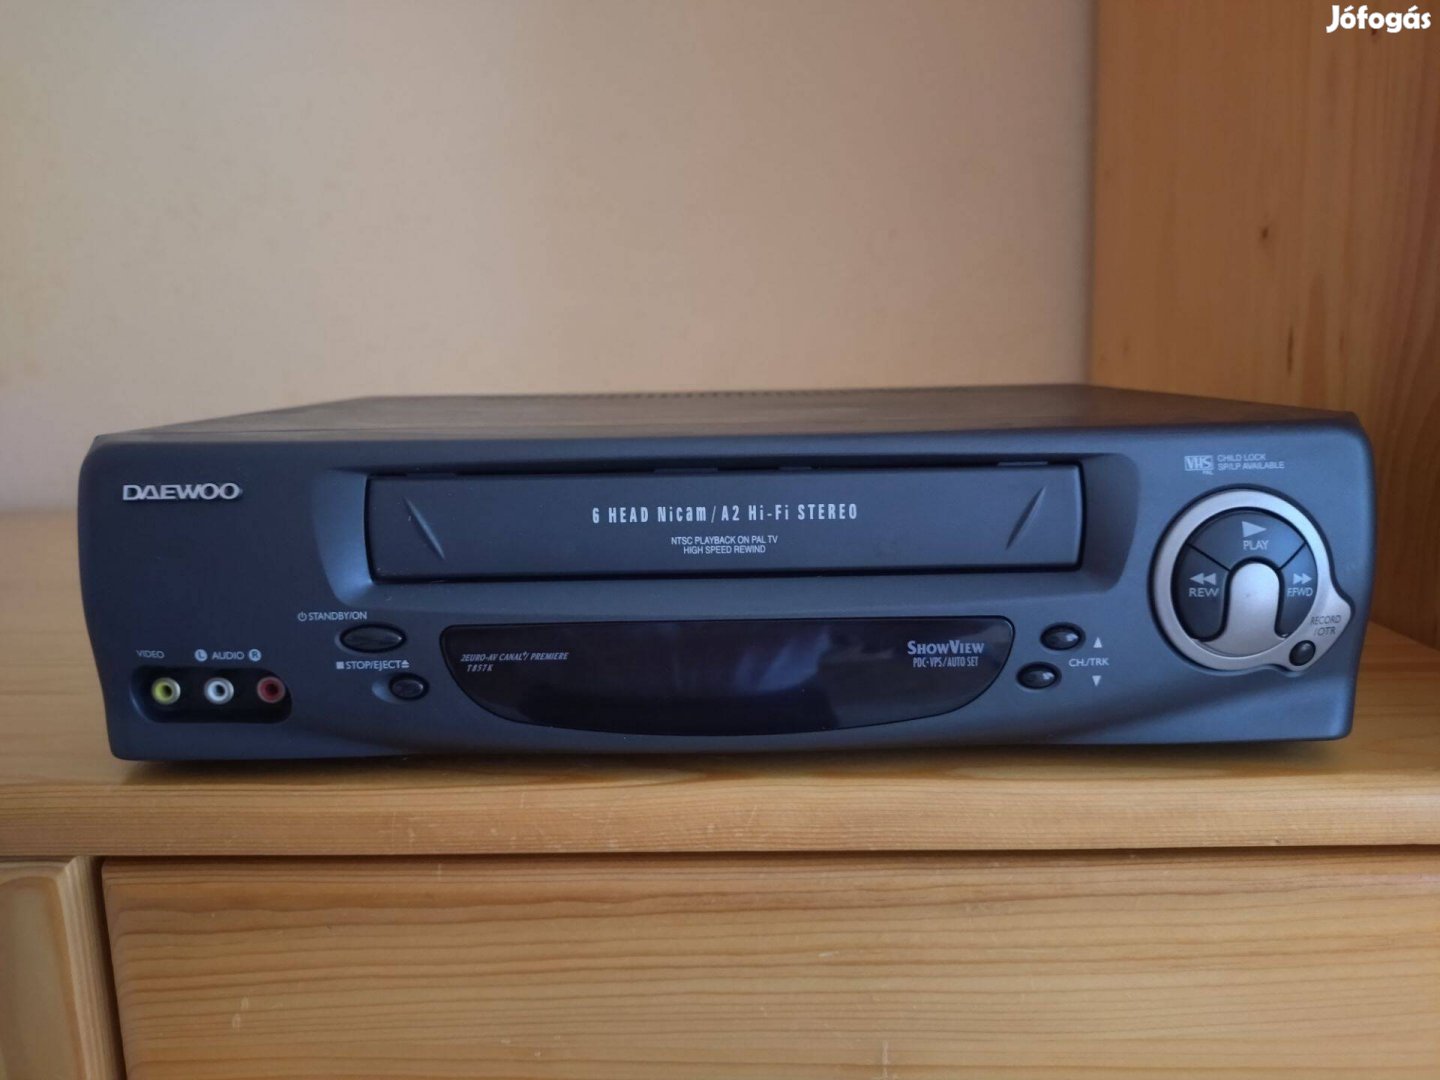 Daewoo VHS Hi-Fi Video Recorder